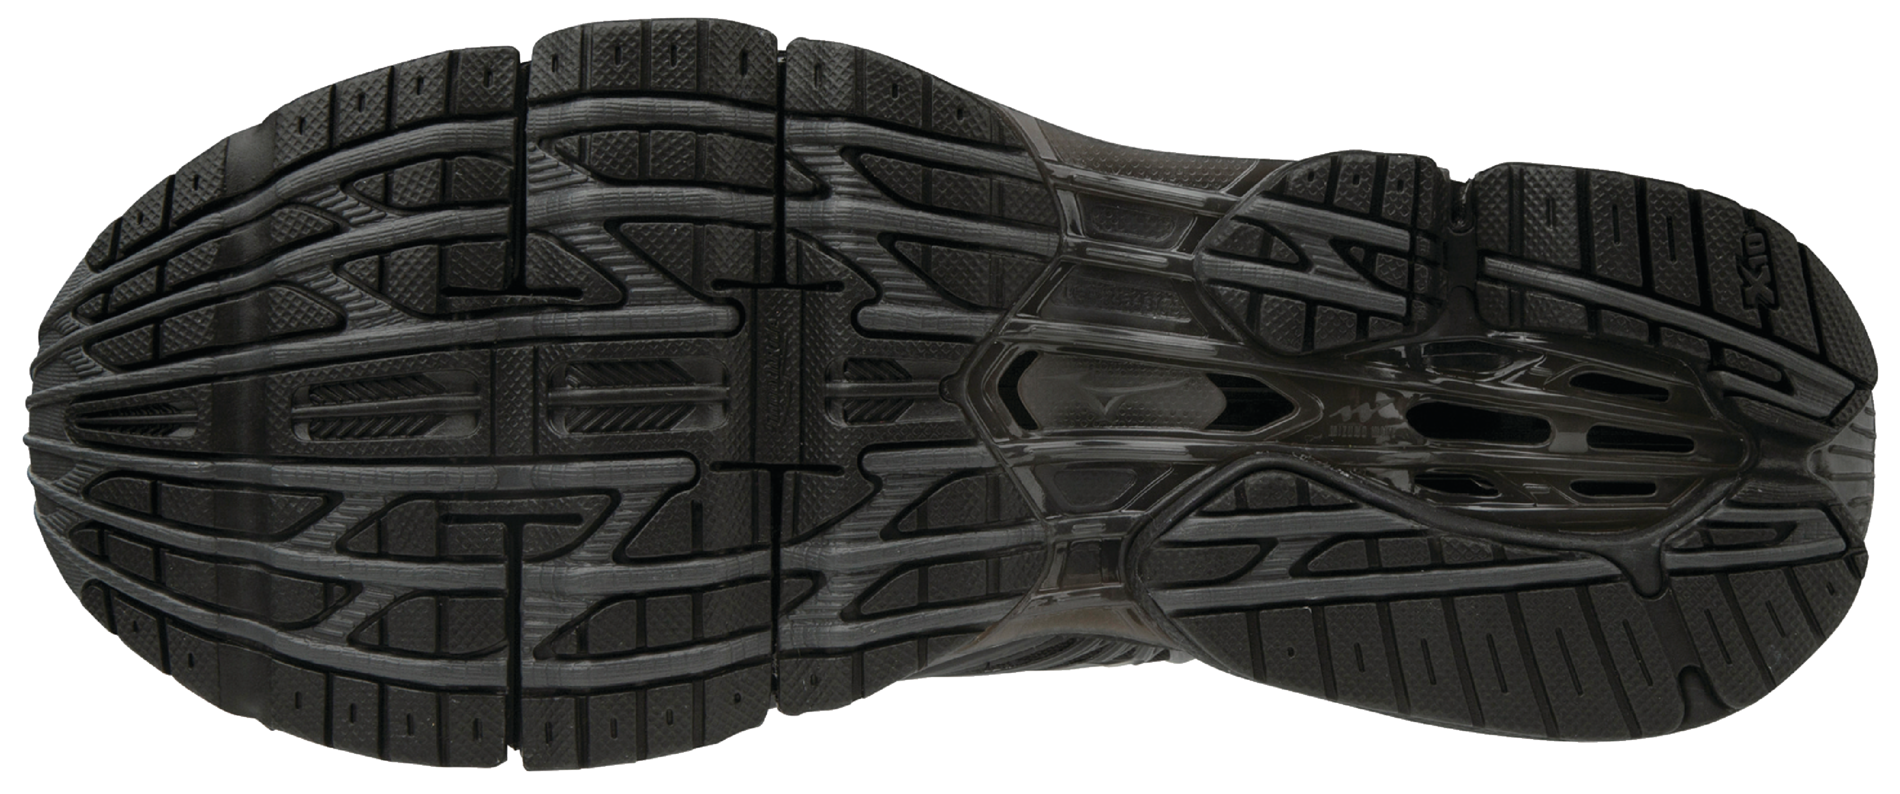 Mizuno Men's Wave Prophecy 8 Running Shoe | eBay